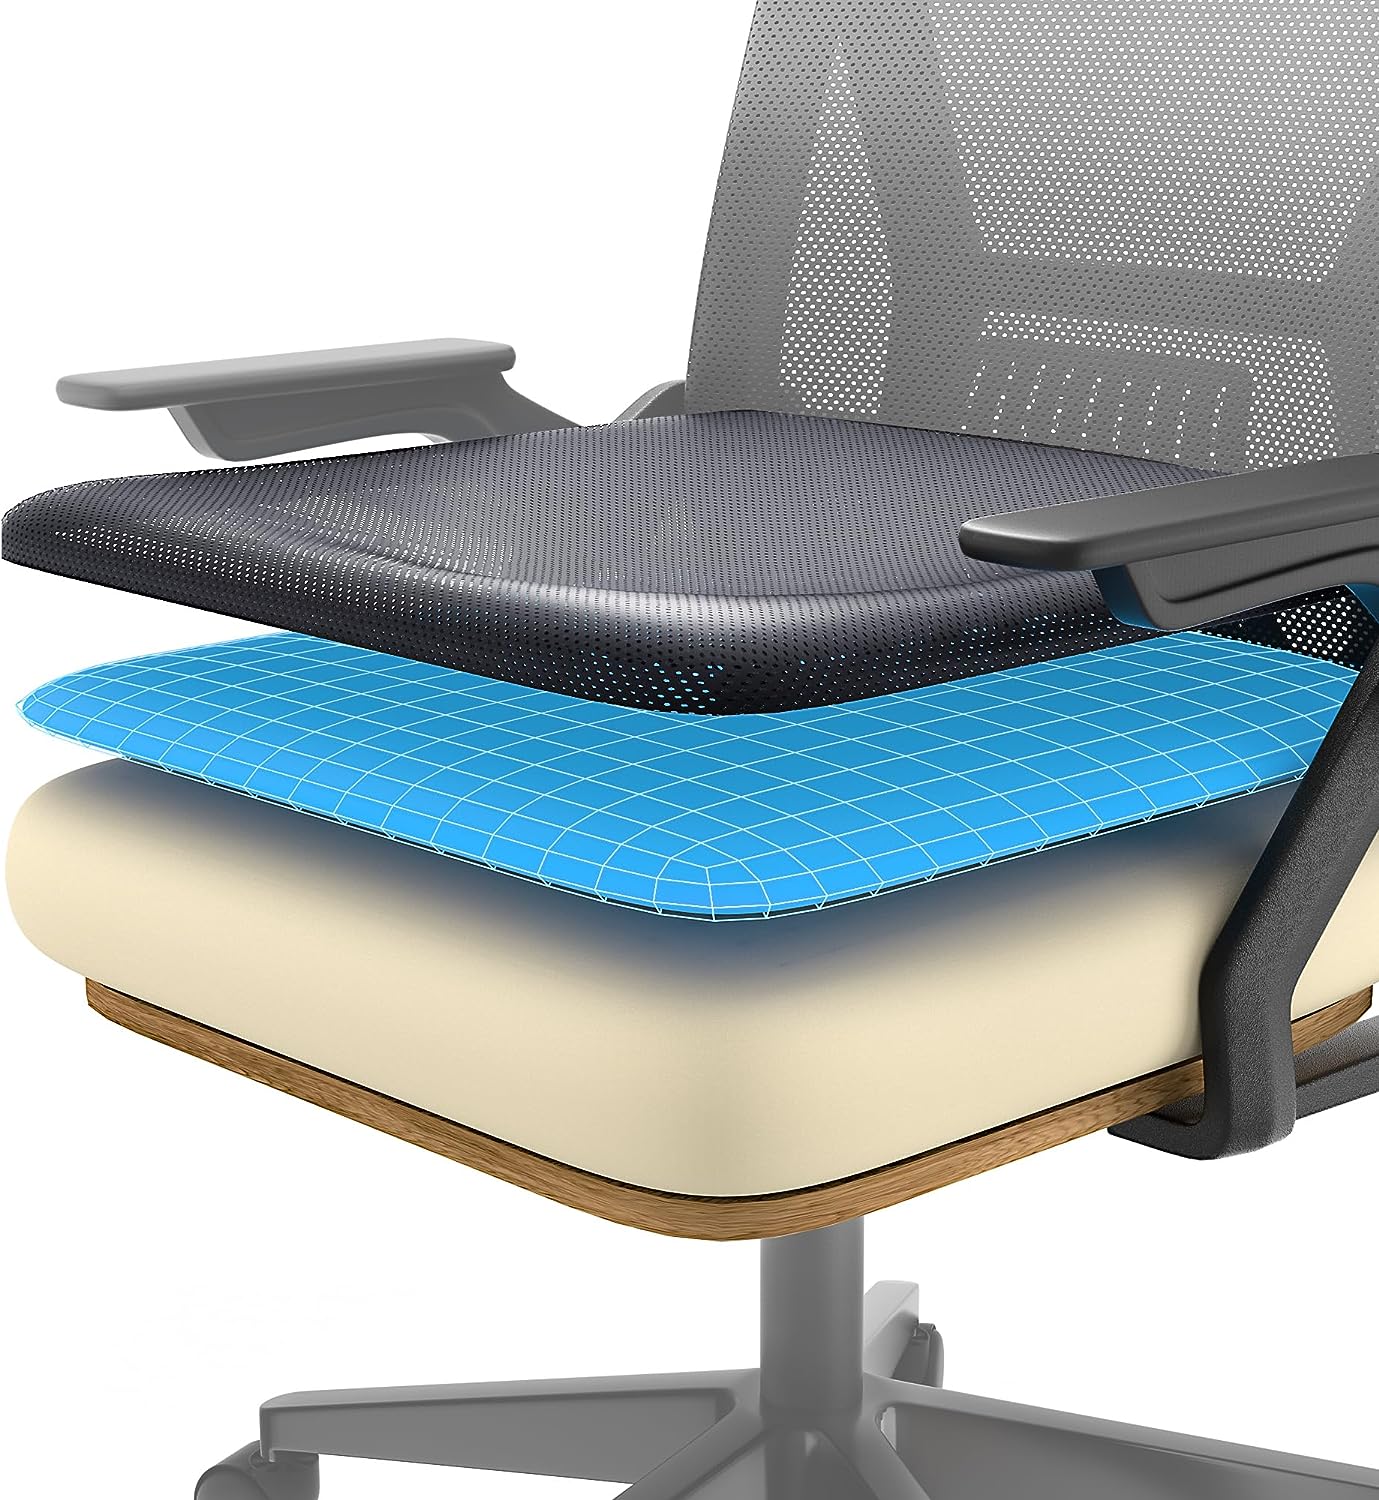 VECELO Fabric Swivel Ergonomic Office Task Chair with Adjustable